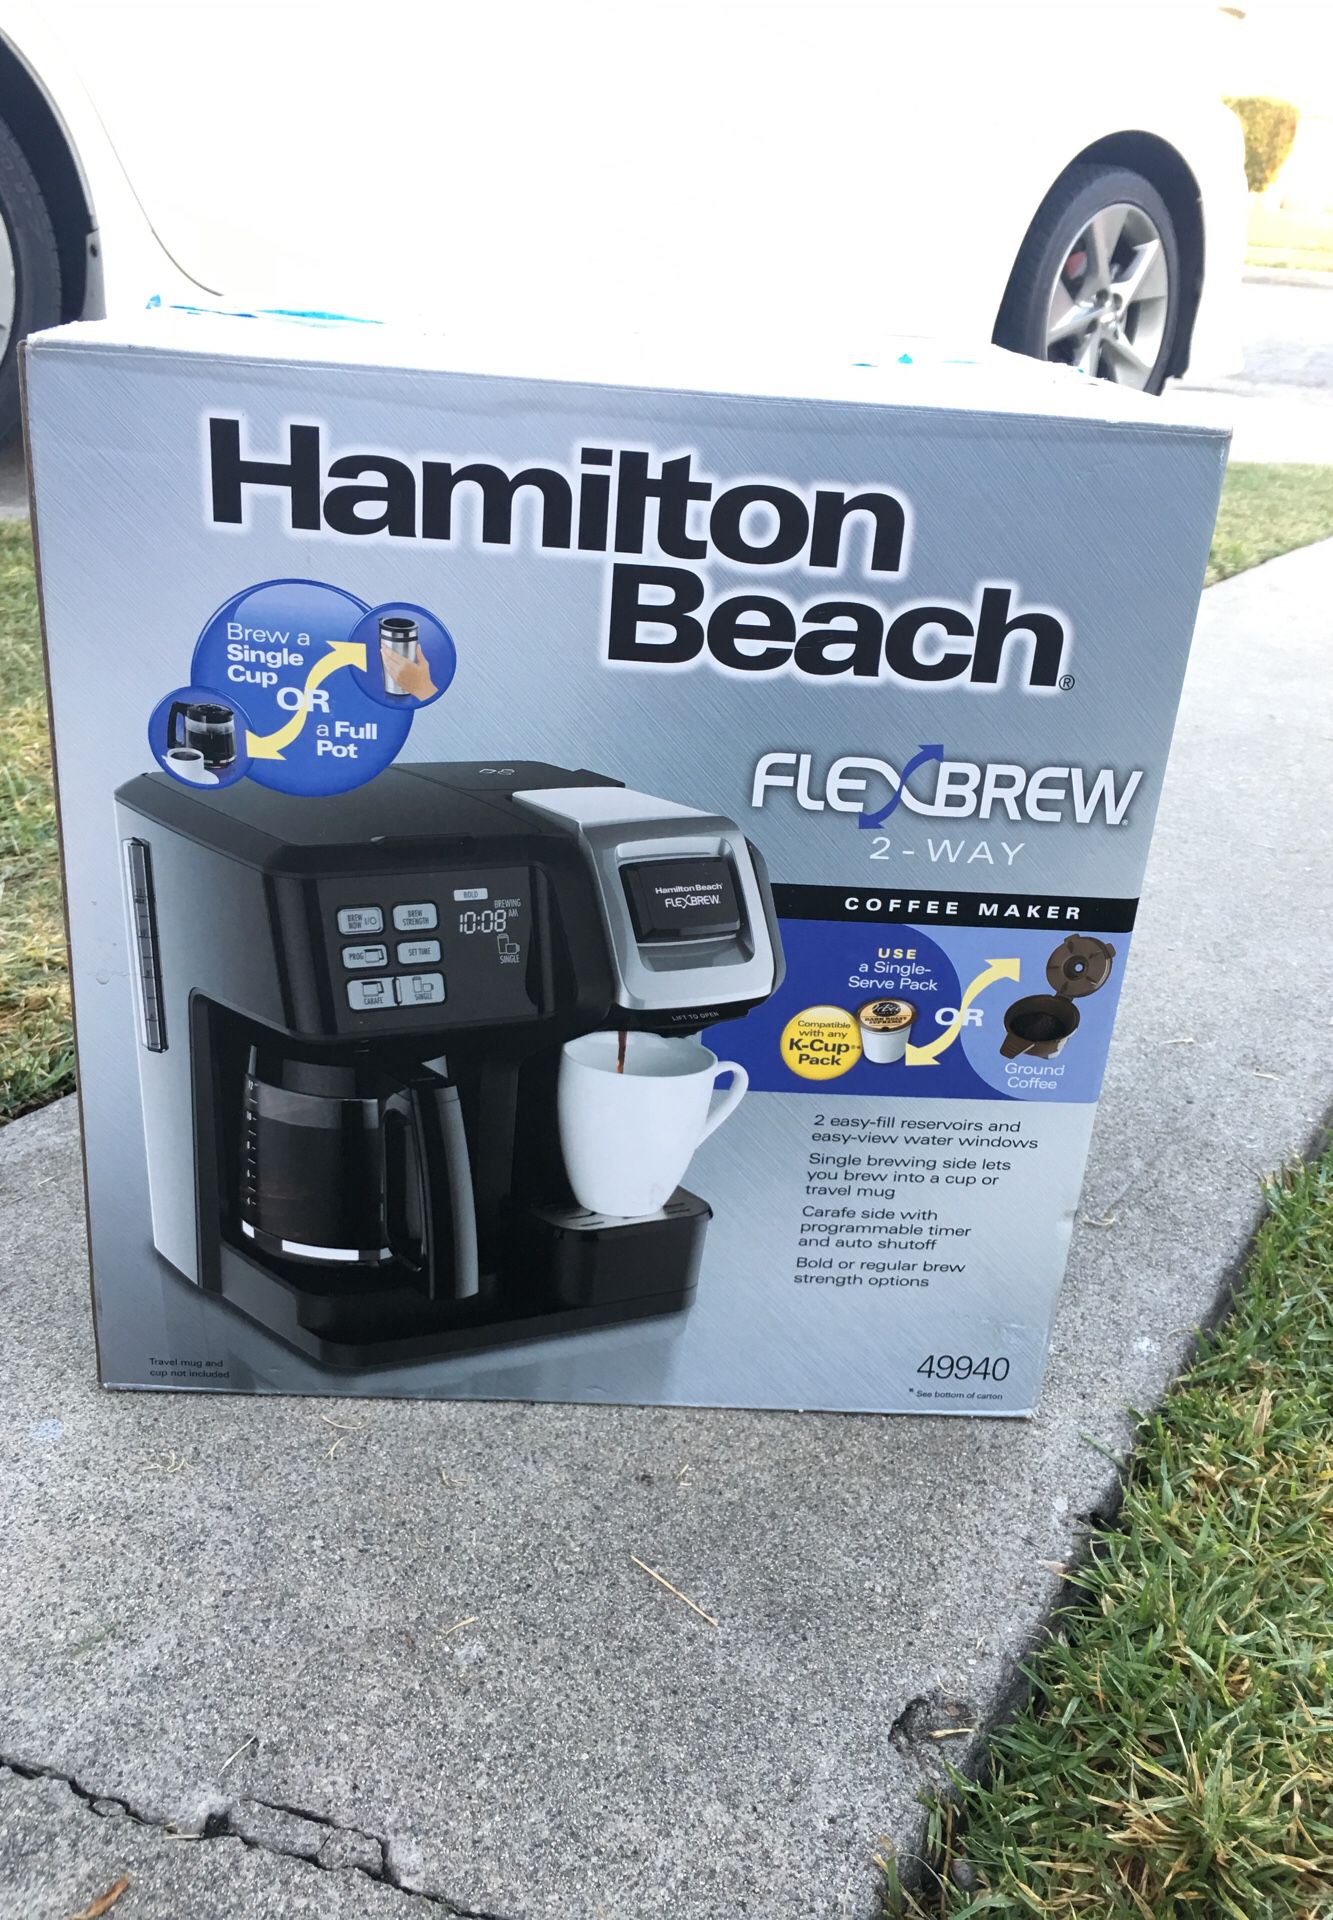 Hamilton Beach flex brew coffee maker